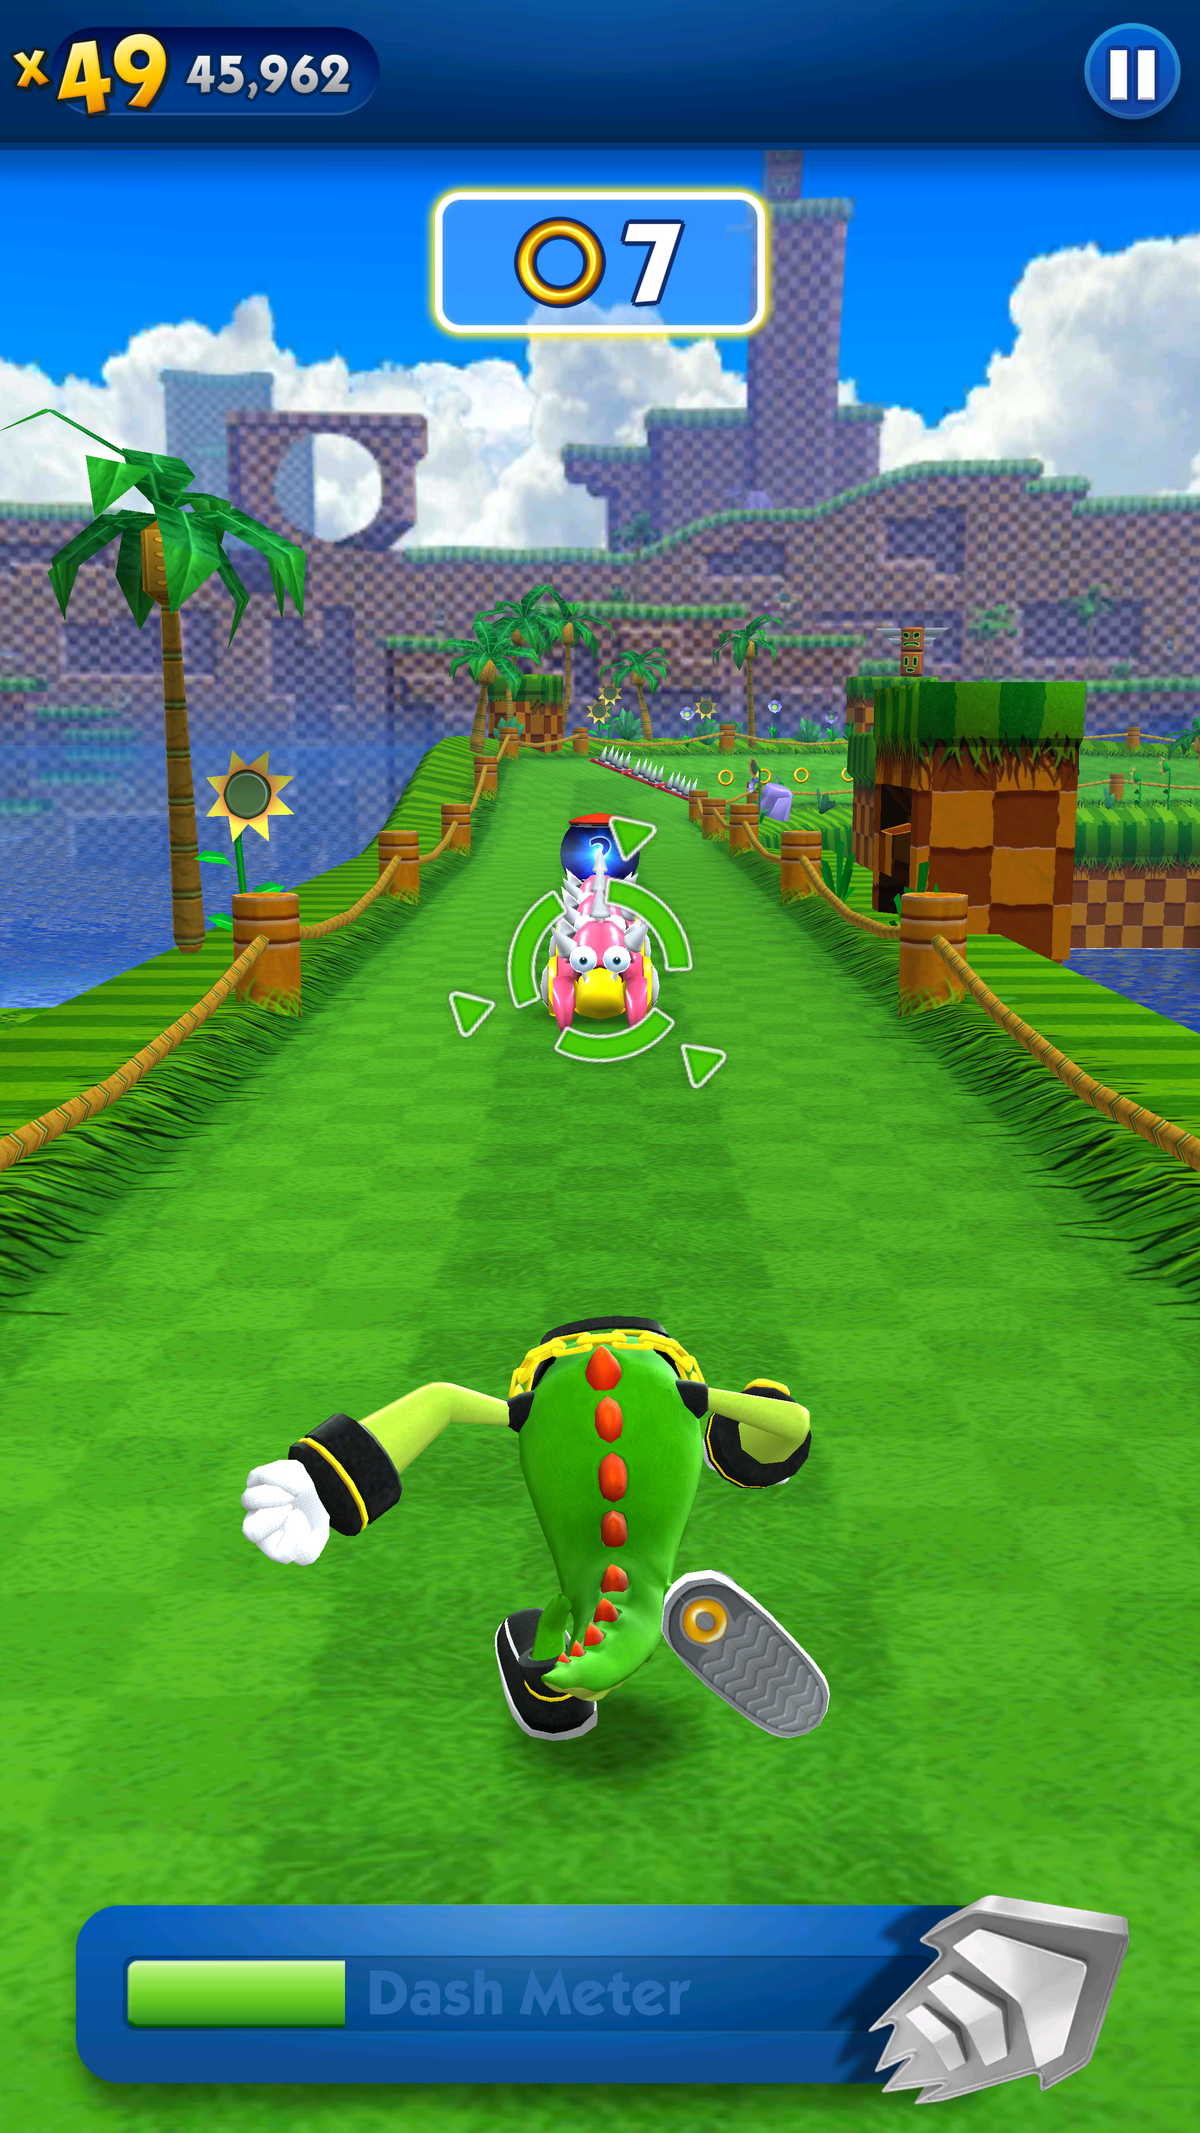 Replying to @gamemaster8192 Here's Green Hill Zone! #Sonic #sonicthehe